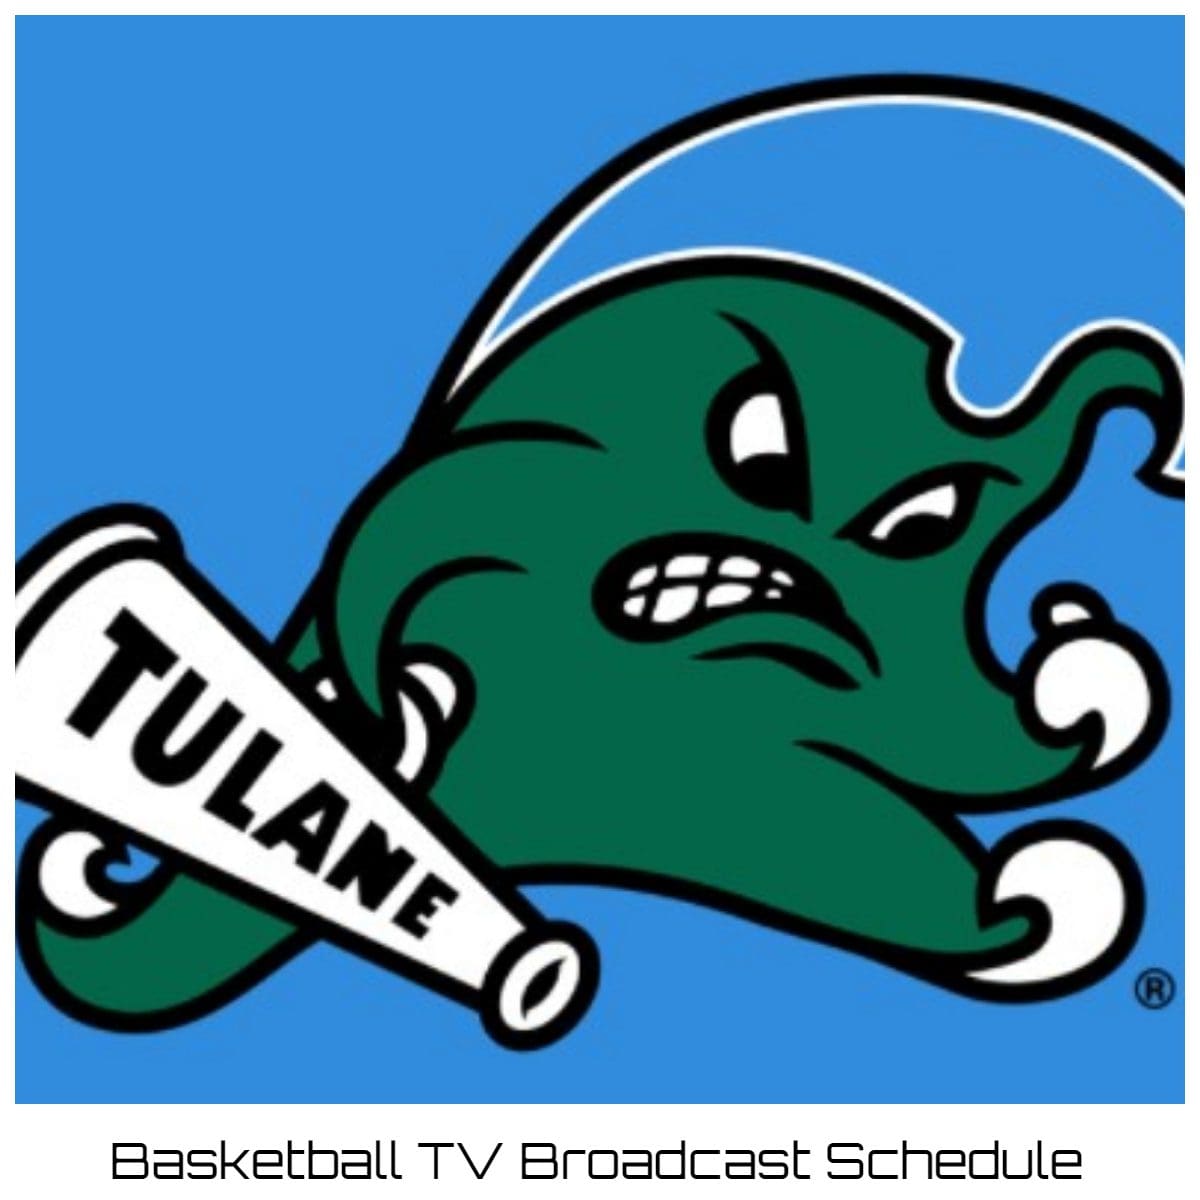 Tulane Green Wave Basketball TV Broadcast Schedule 202223 Printable PDF